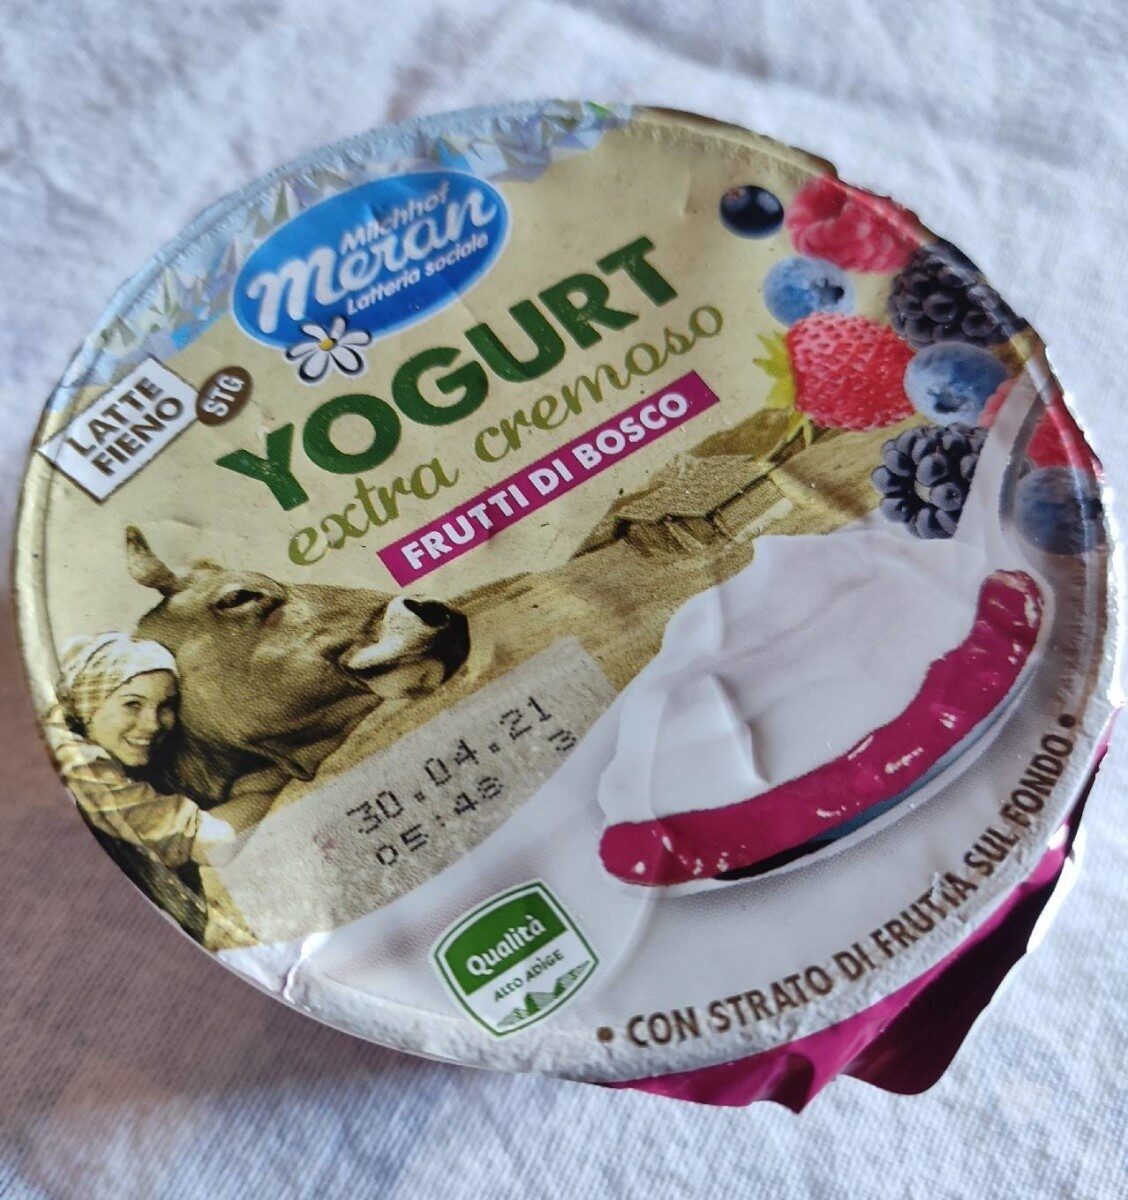 Yogurt extra cremoso frutti di bosco - Product - it